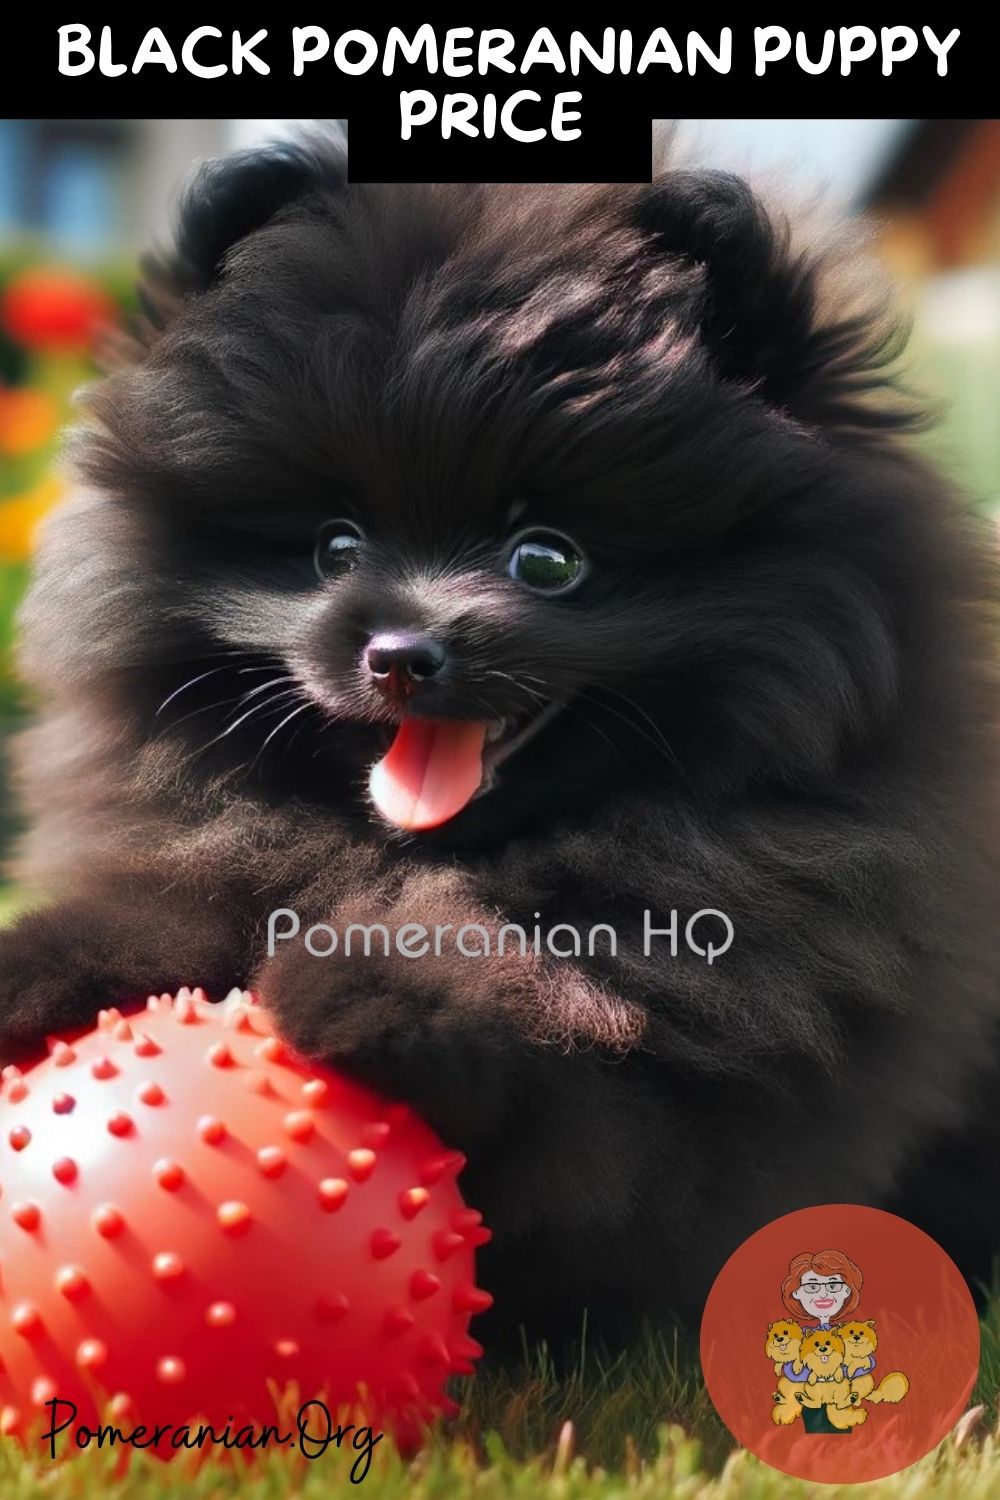 Black Pomeranian Puppy Price